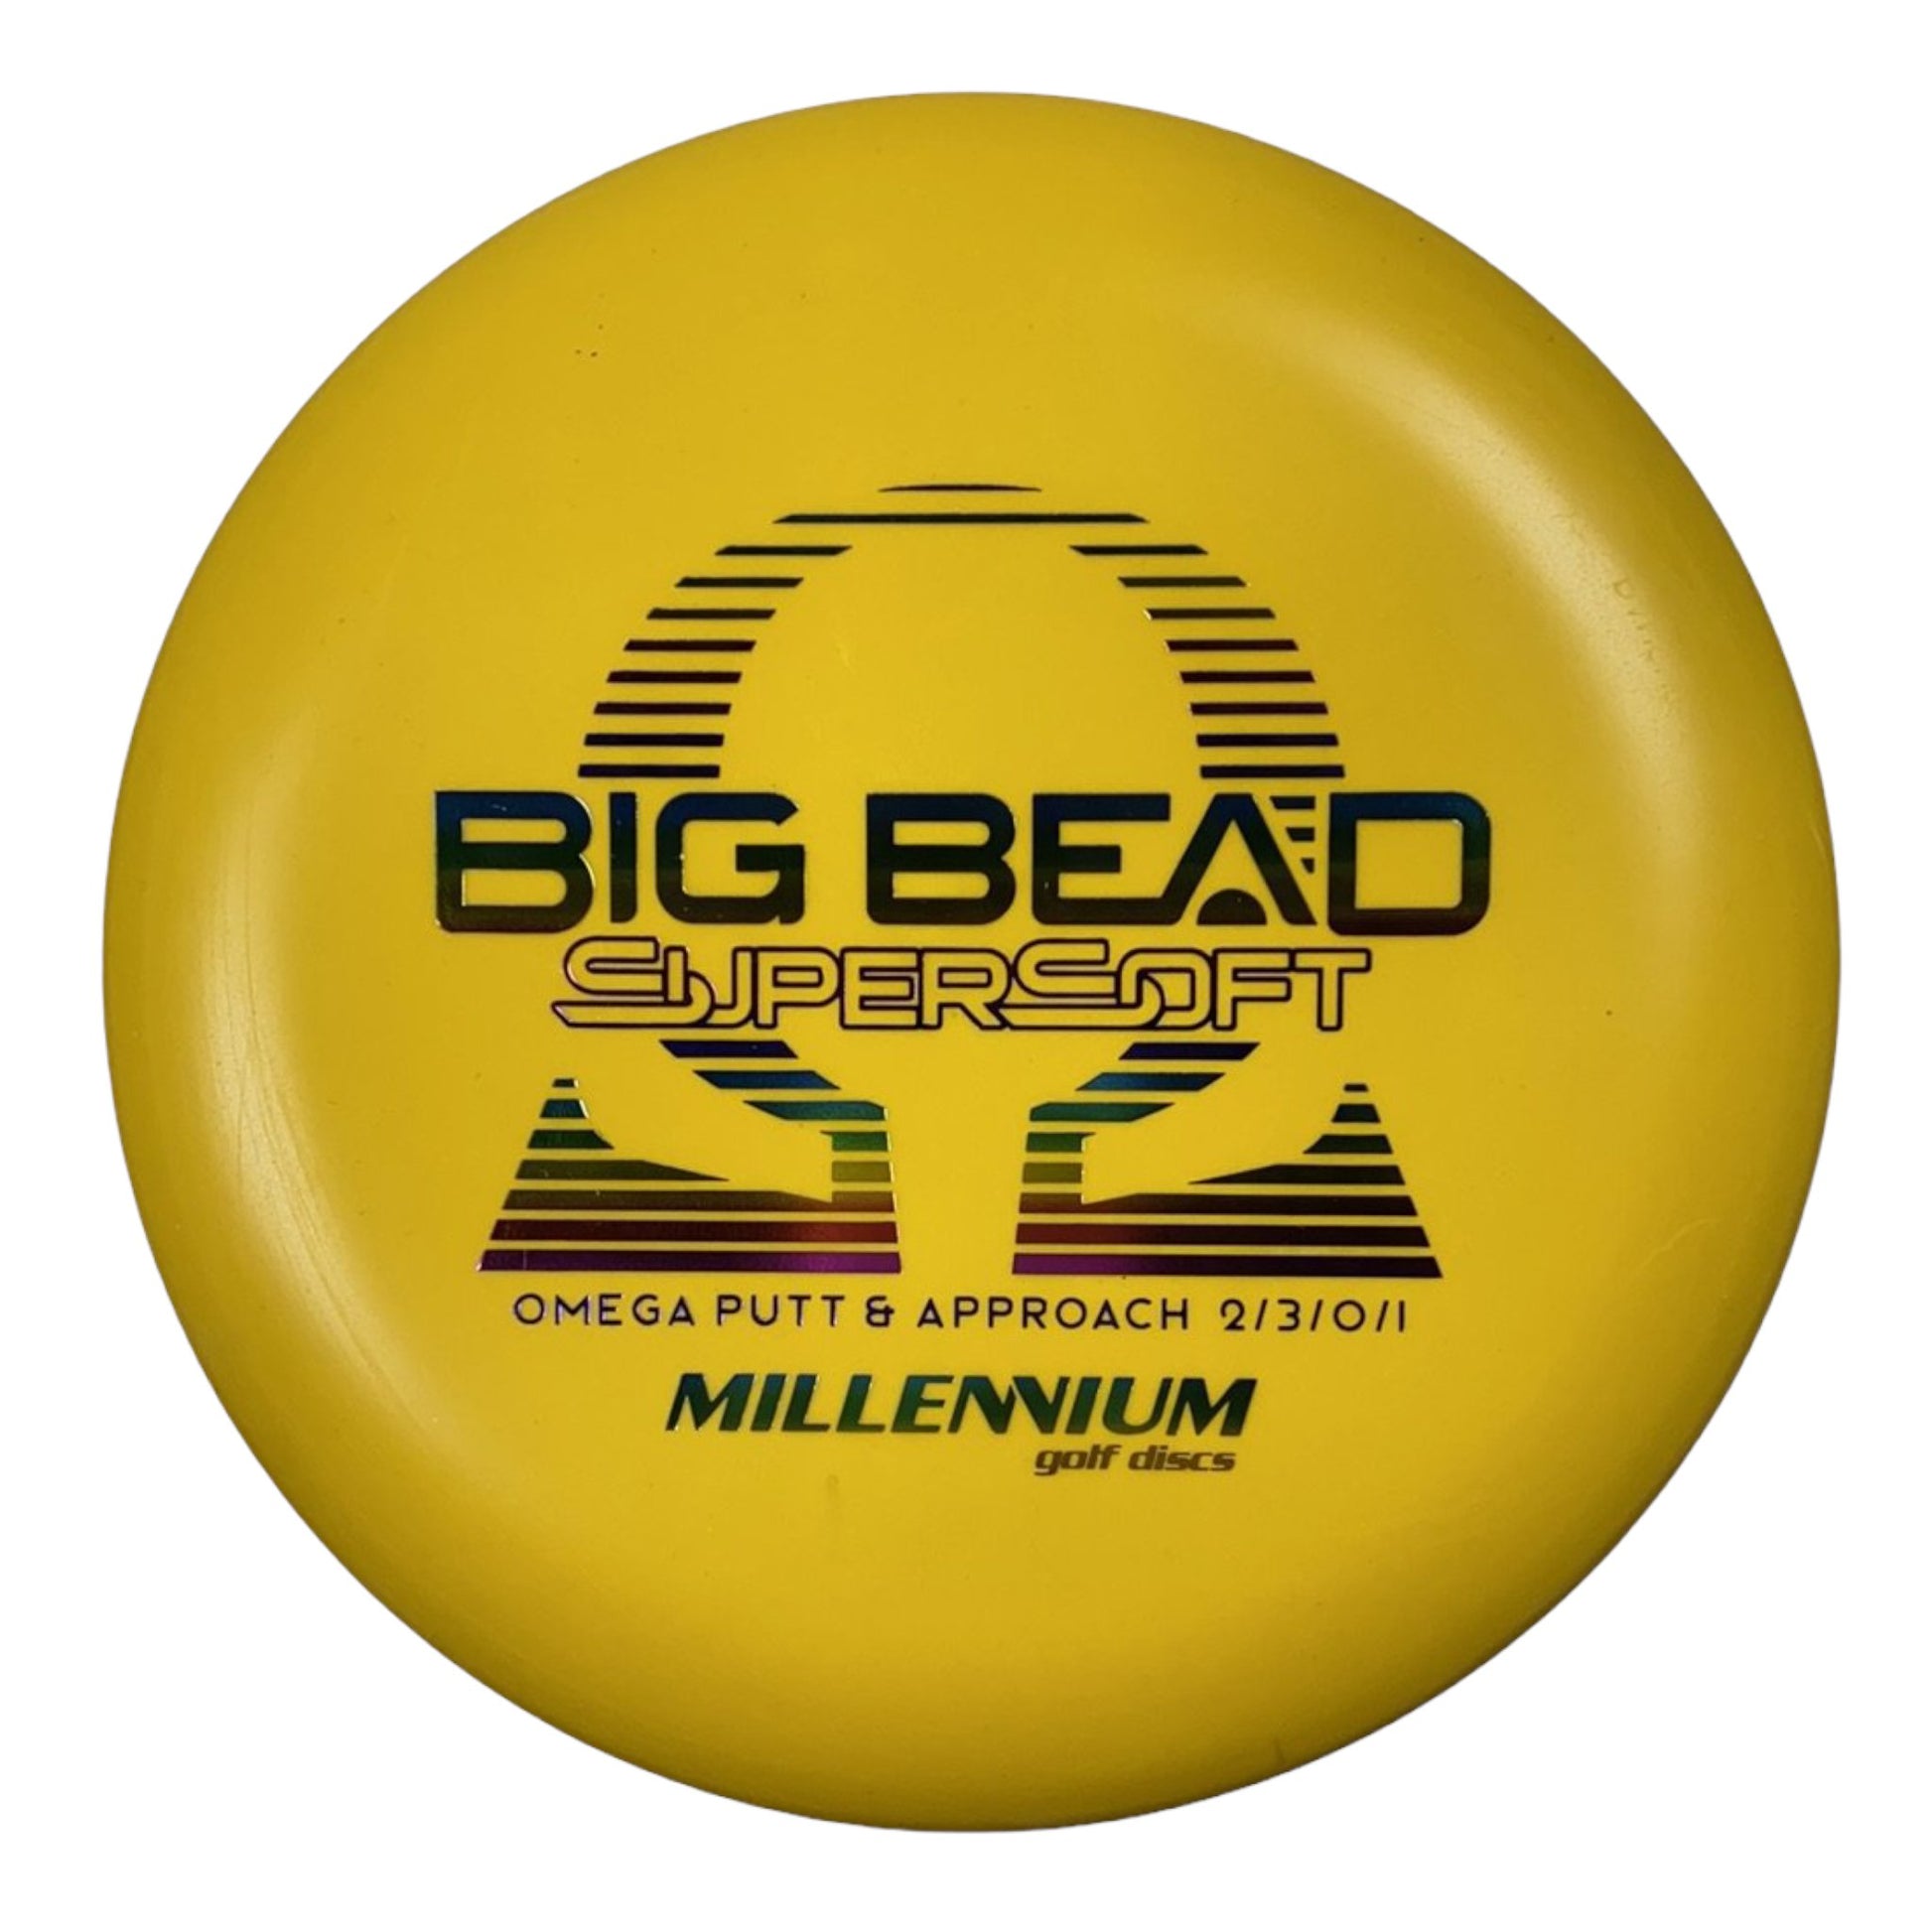 Millennium Golf Discs Omega Big Bead | Supersoft | Yellow/Rainbow 171g Disc Golf